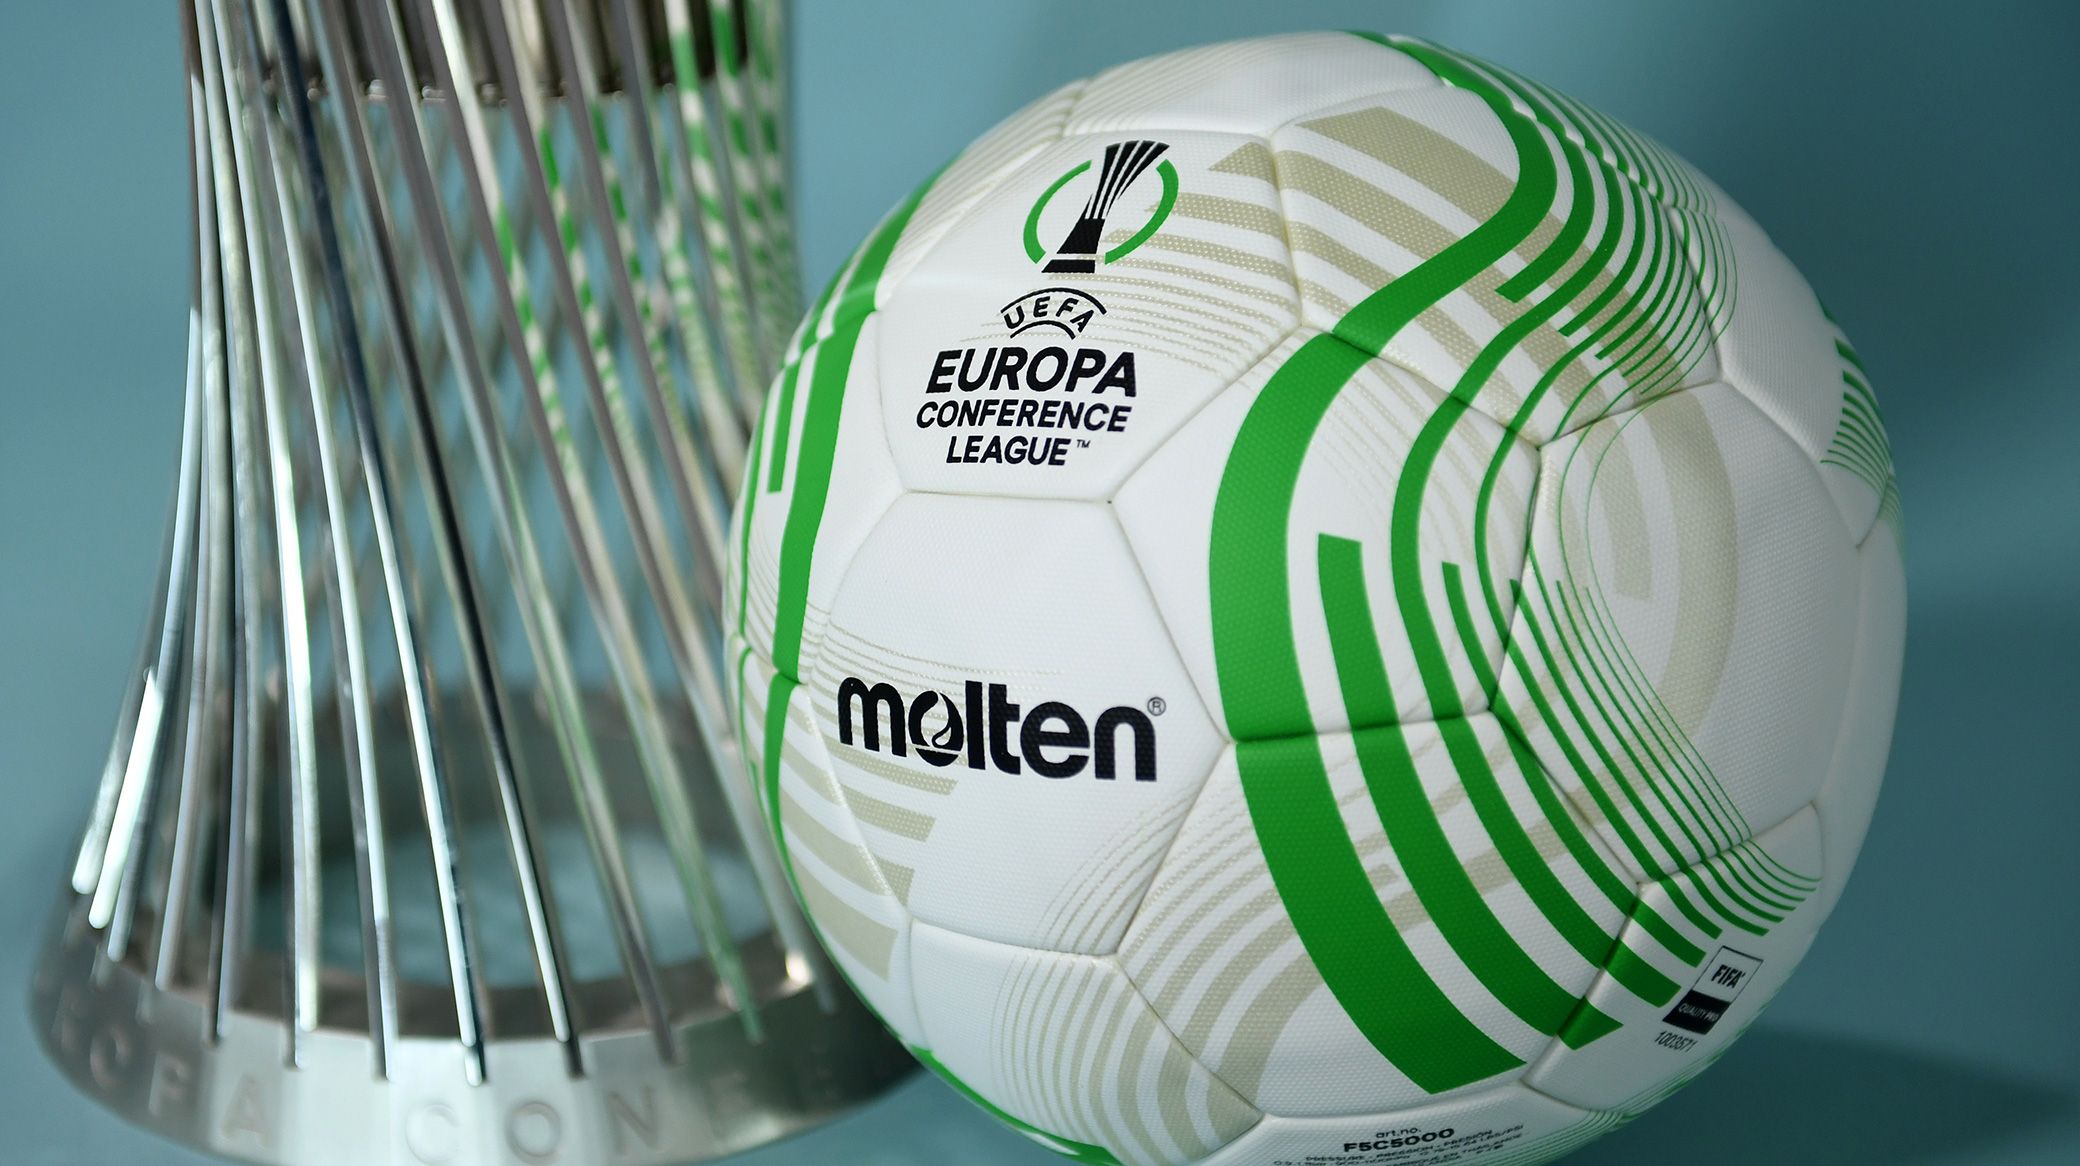 Europa conference league fixtures